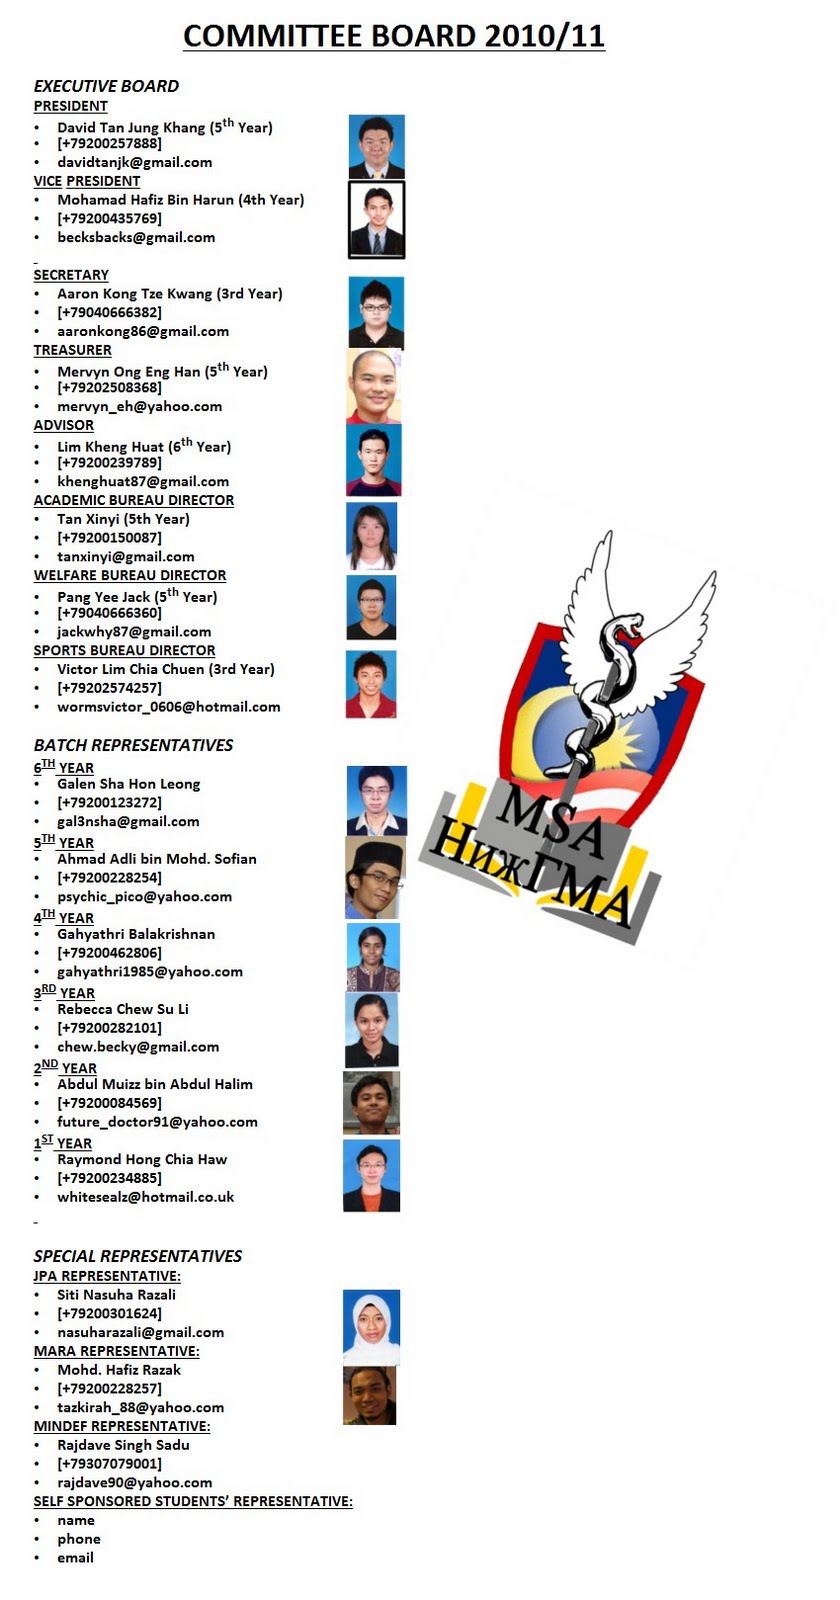 MSA Committee 2010/2011